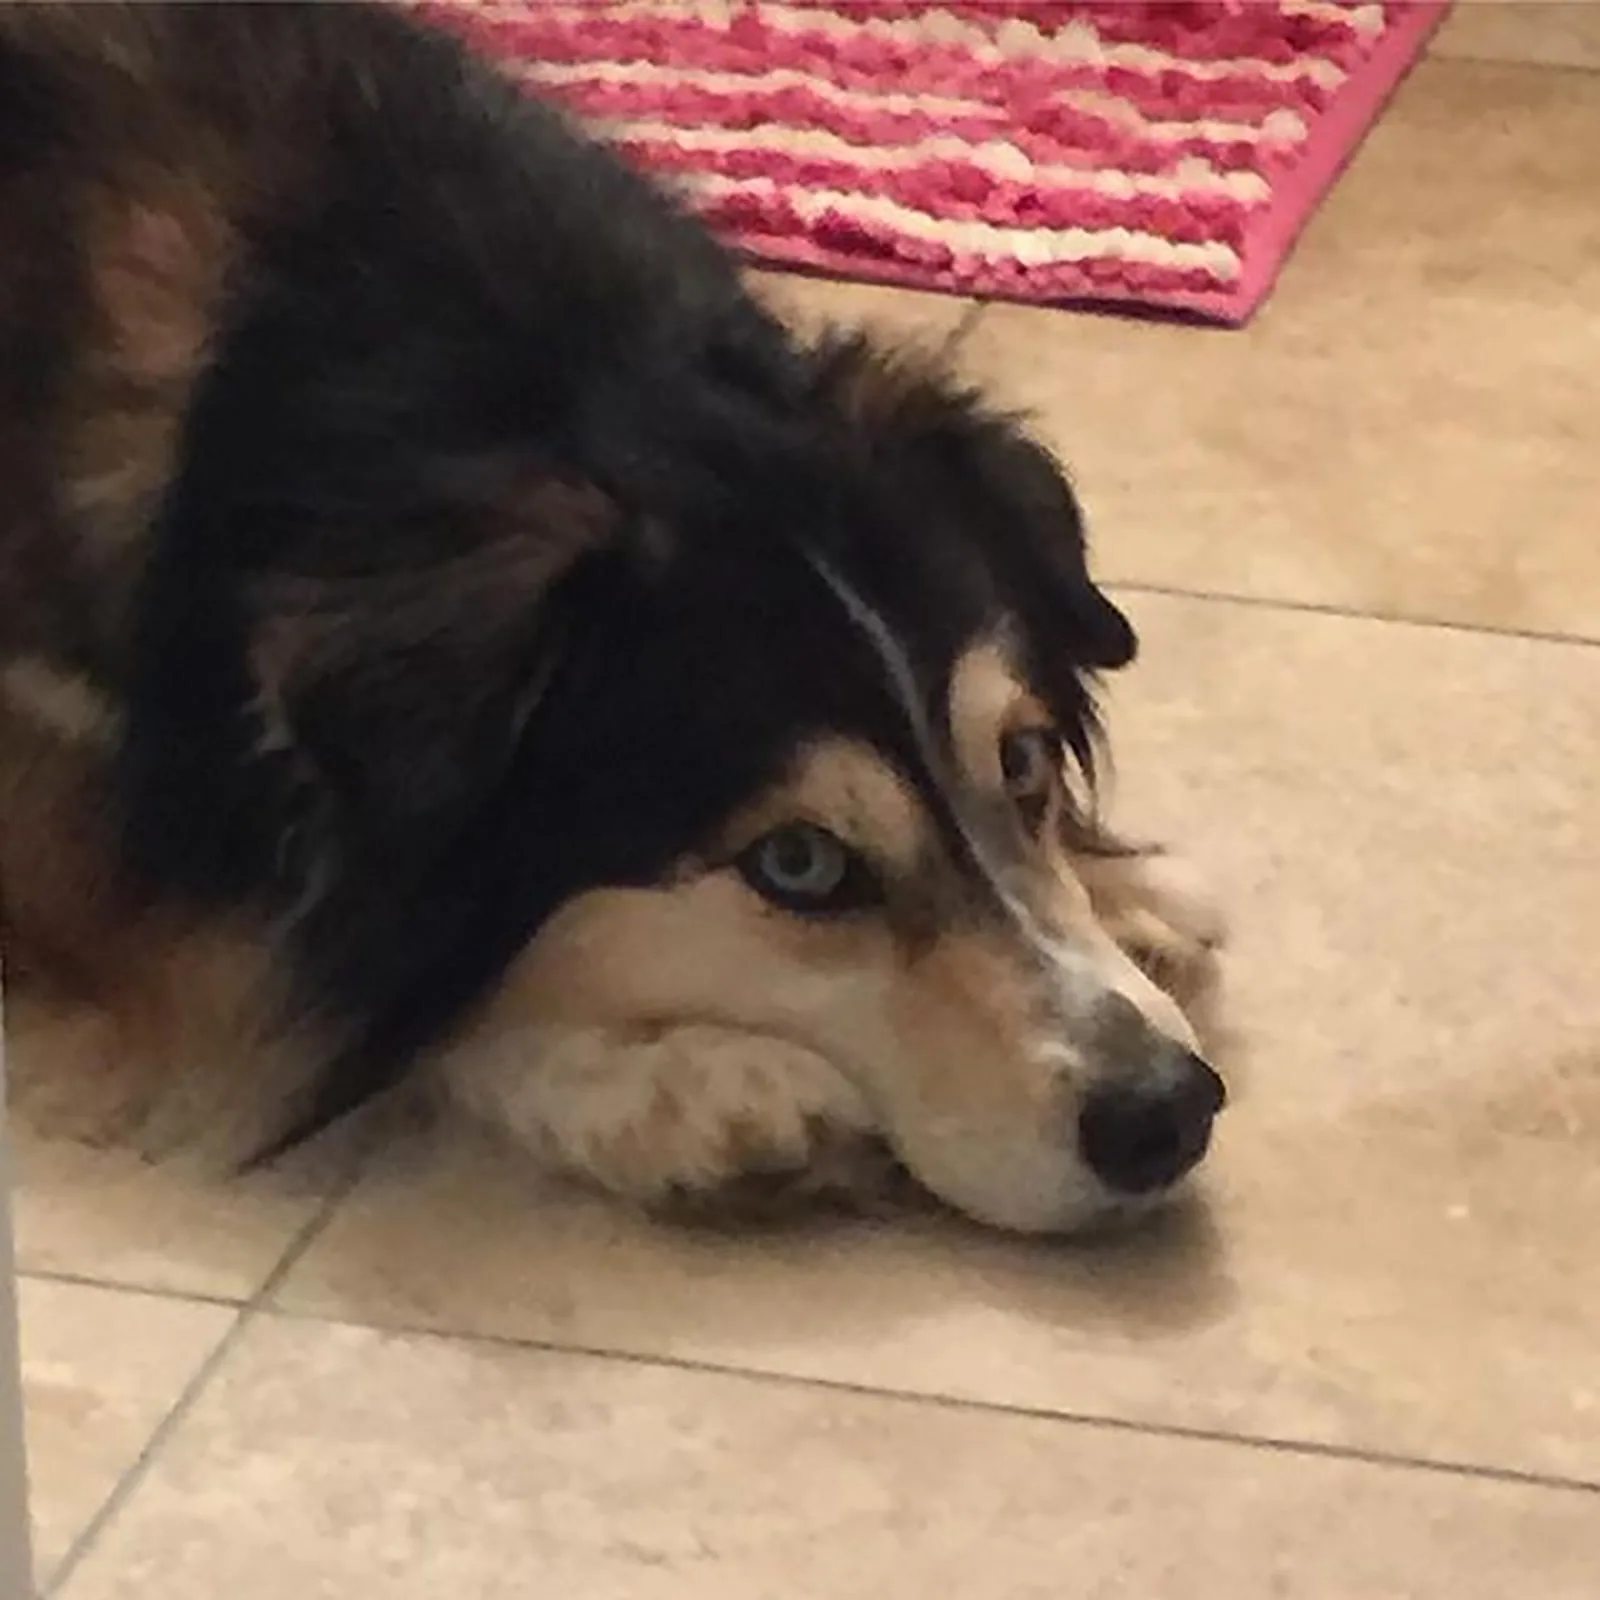 husky dachshund dog lying on the floor indoors